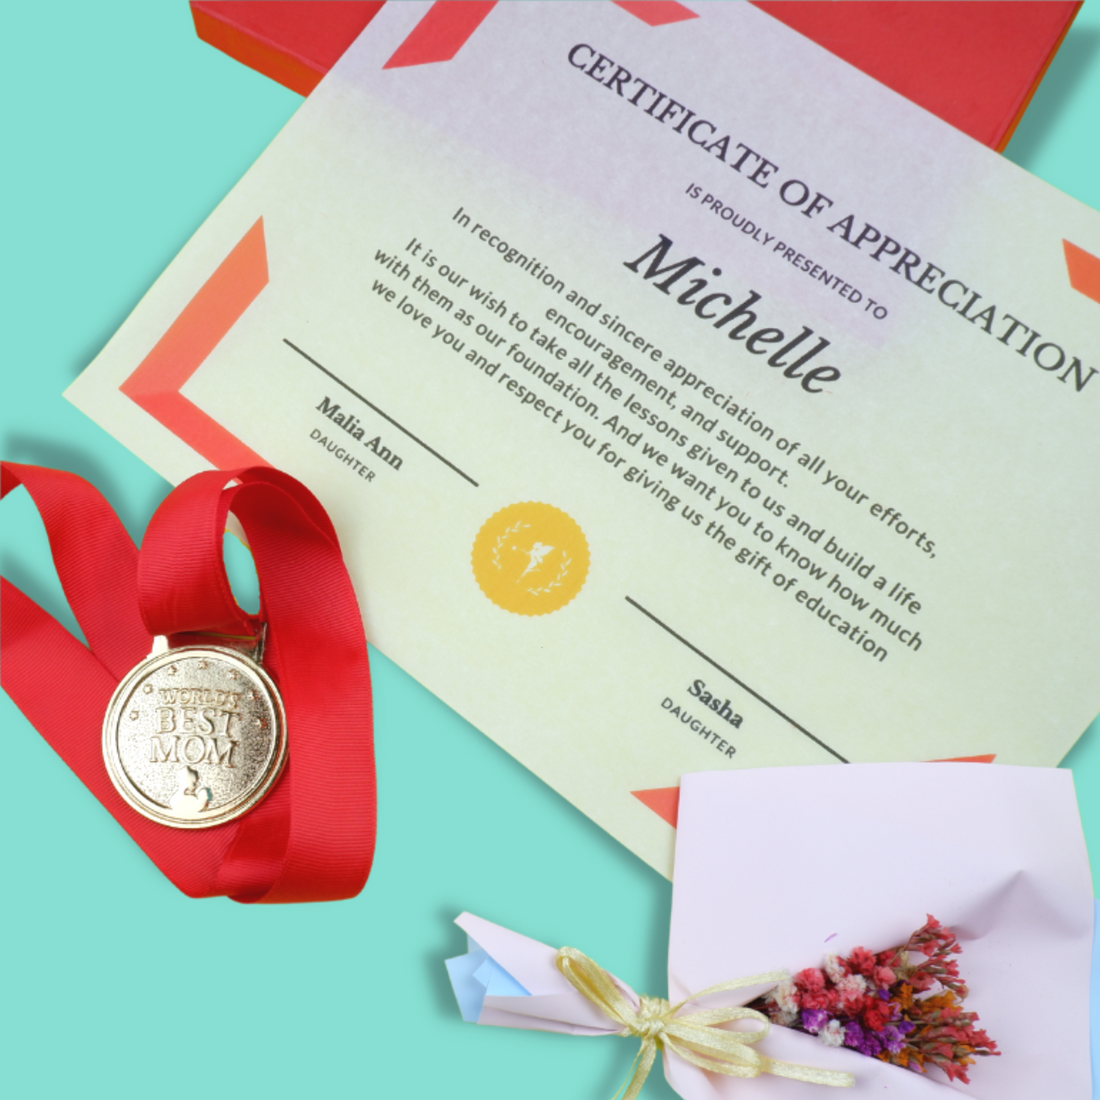 World's Best MOM Certificate